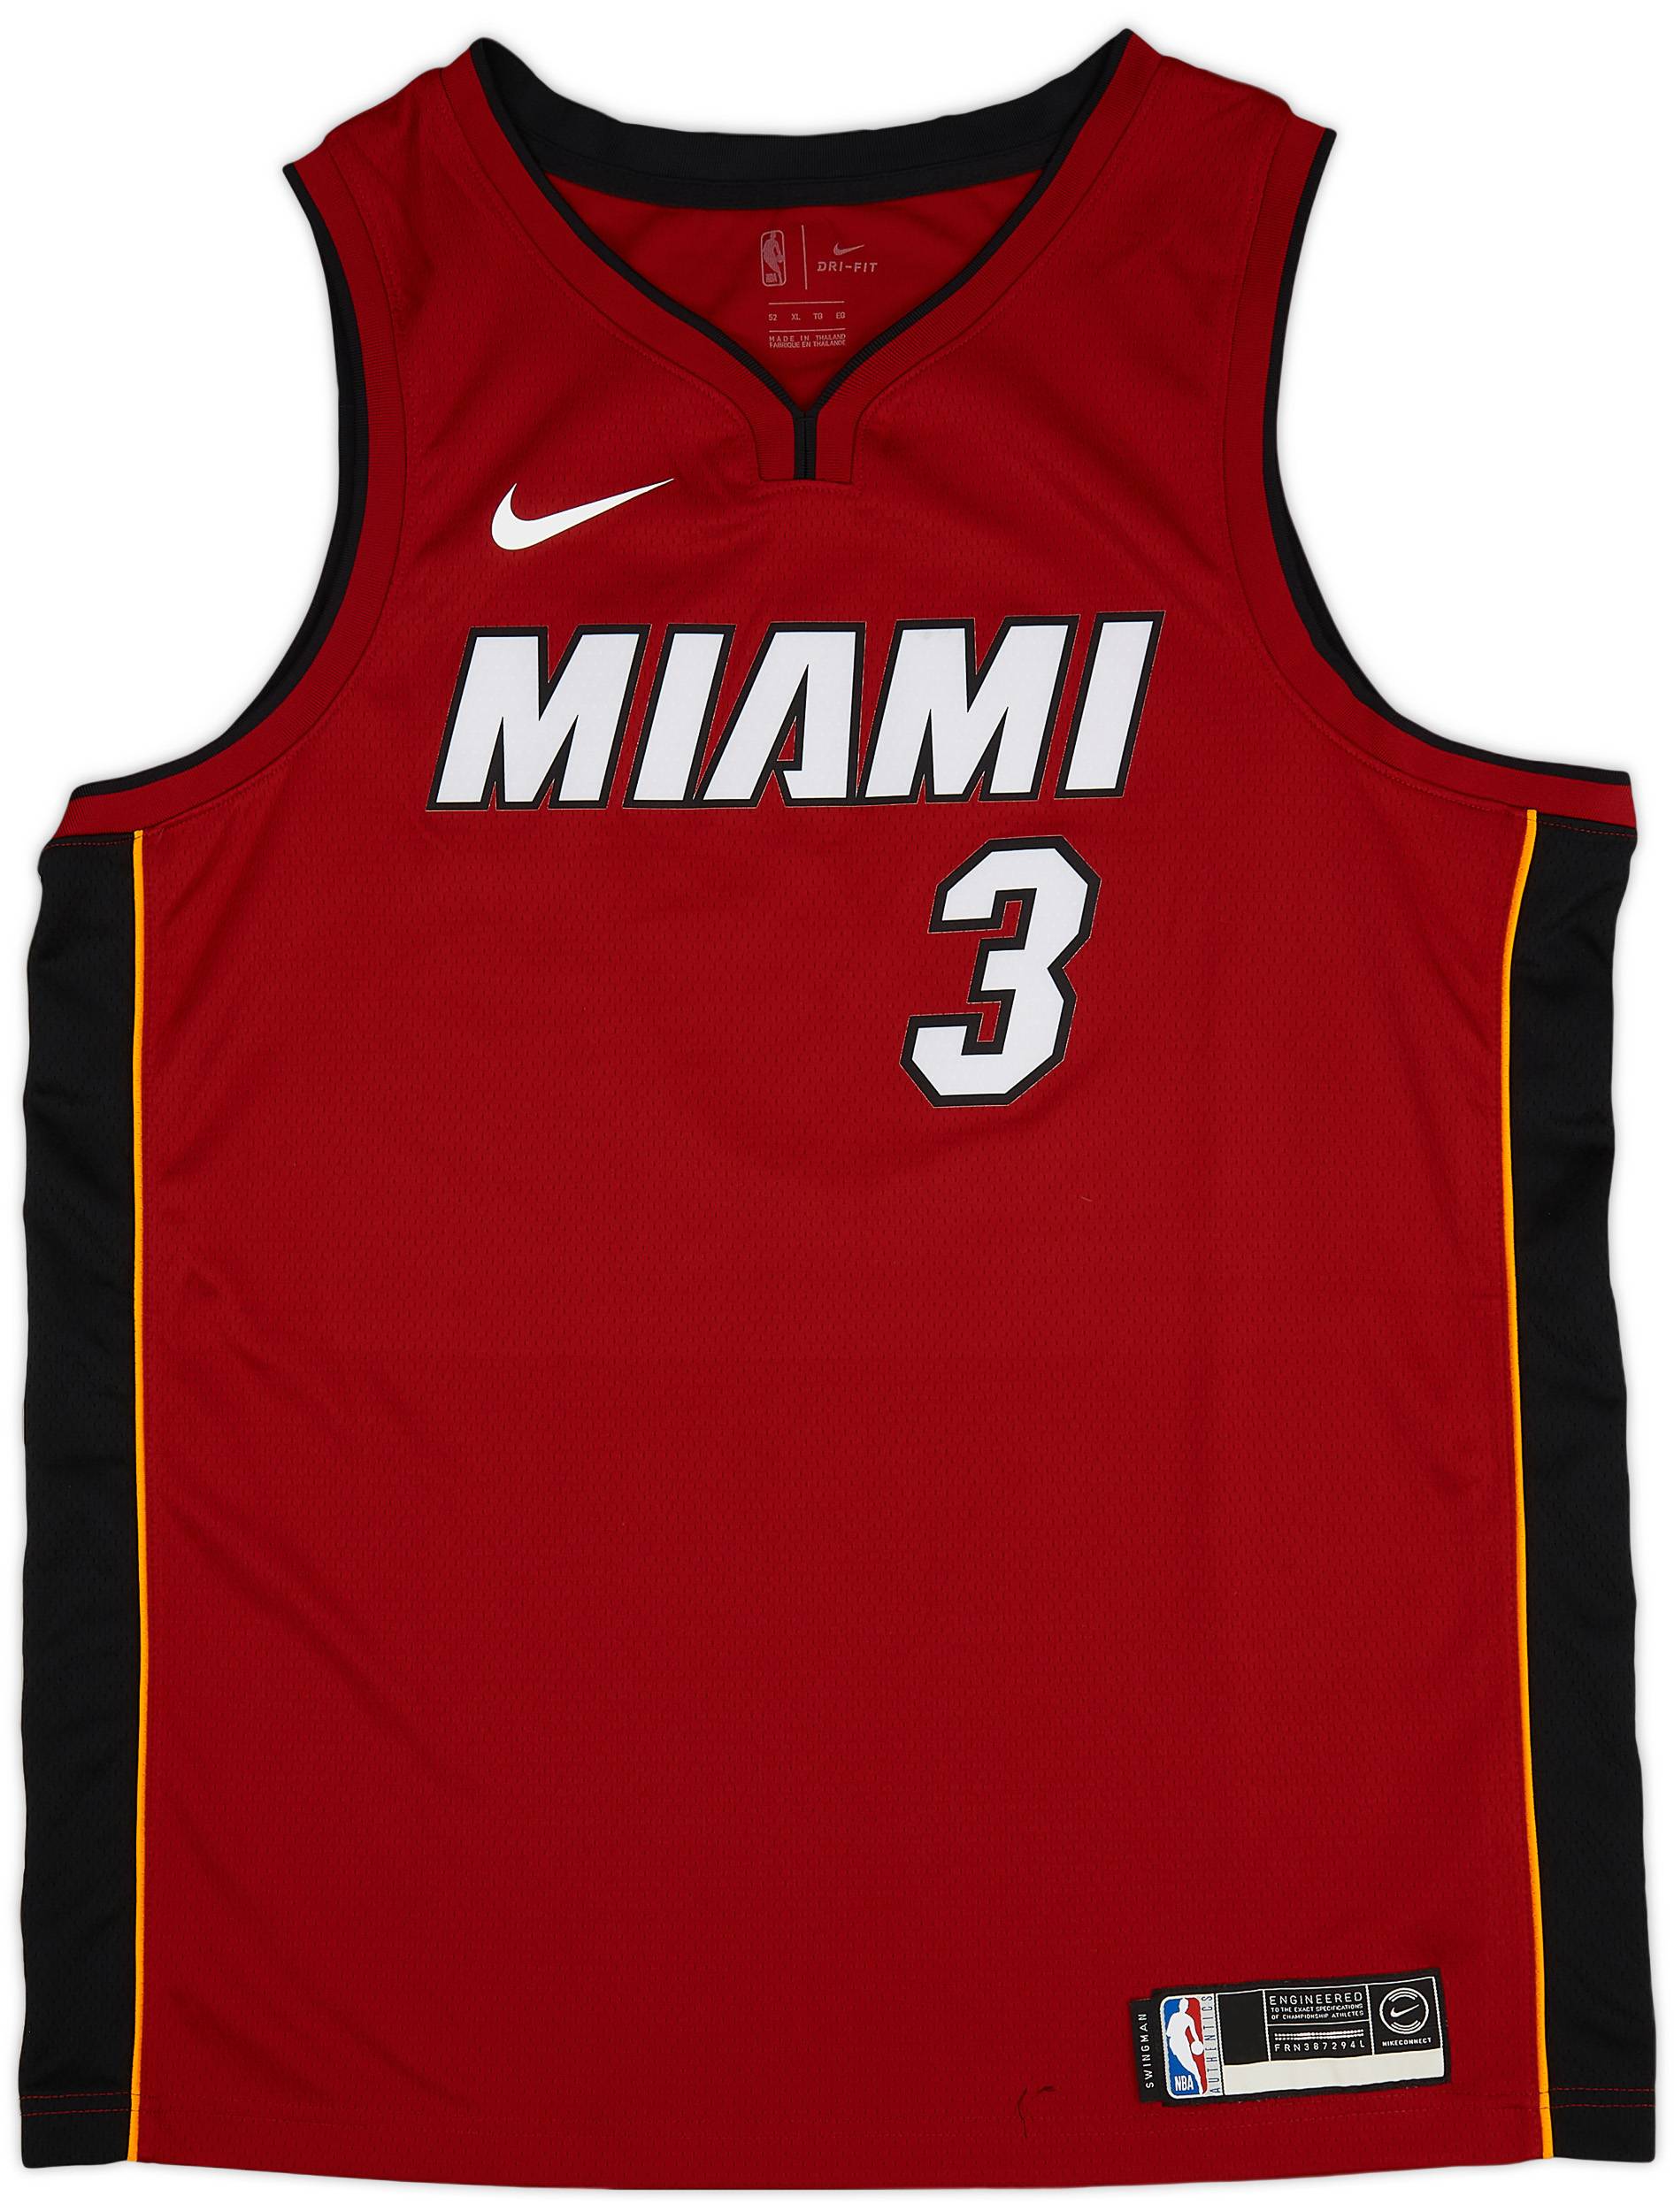 2018-19 Miami Heat Wade #3 Nike Swingman Alternate Jersey (Excellent) XL